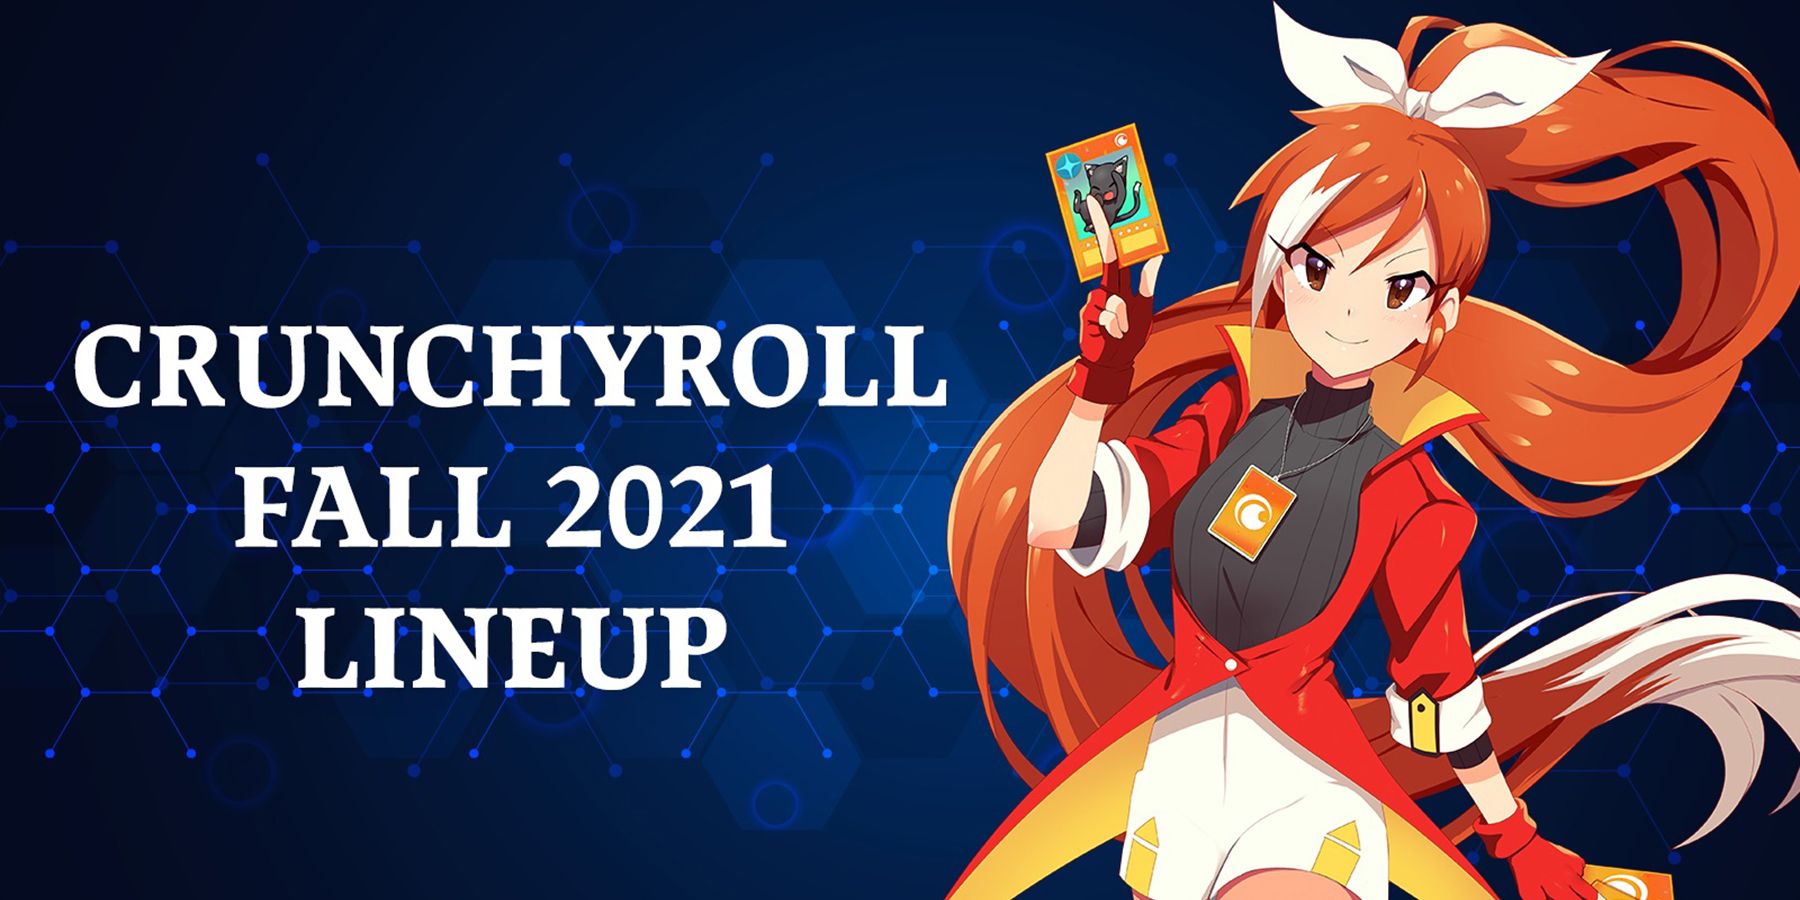 Crunchyroll onthult spannende line-up najaar 2021, inclusief Demon Slayer